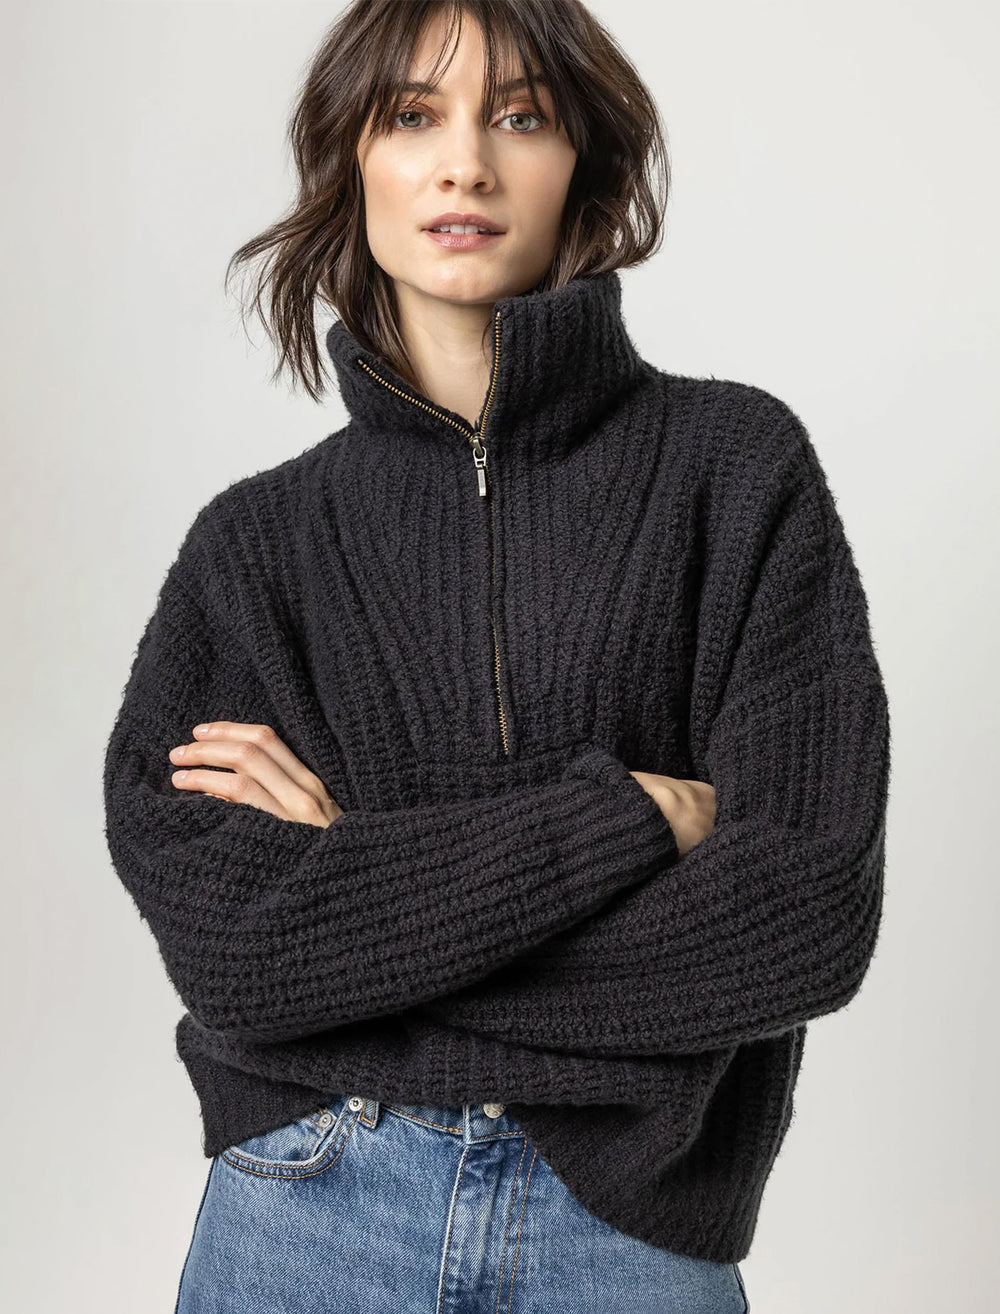 Model wearing Lilla P.'s ribbed half zip sweater in black.